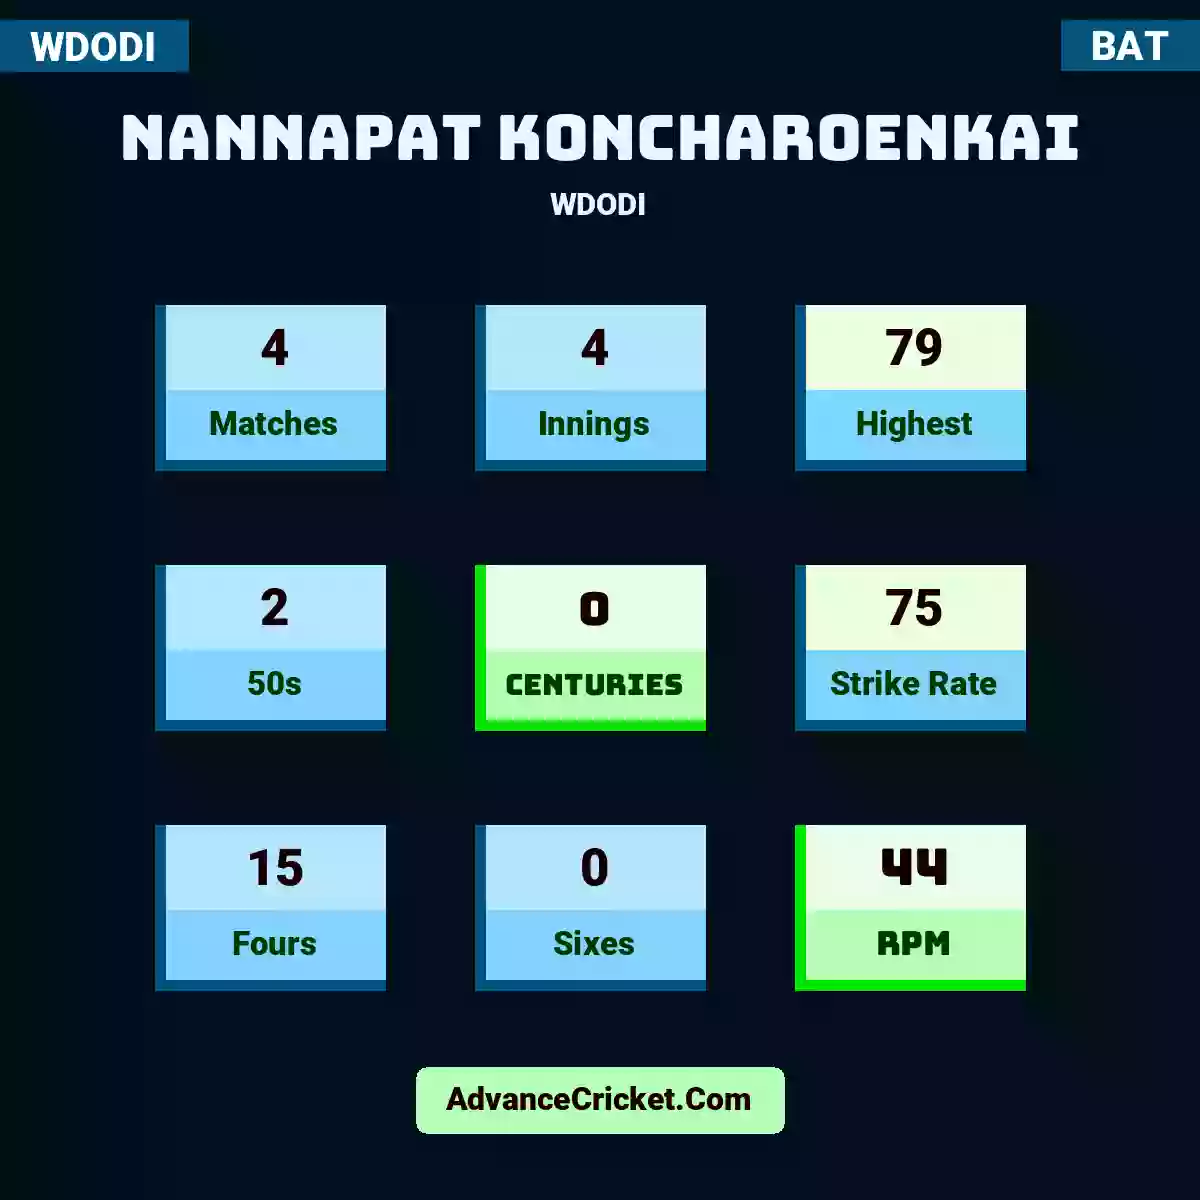 Nannapat Koncharoenkai WDODI , Nannapat Koncharoenkai played 4 matches, scored 79 runs as highest, 2 half-centuries, and 0 centuries, with a strike rate of 75. N.Koncharoenkai hit 15 fours and 0 sixes, with an RPM of 44.